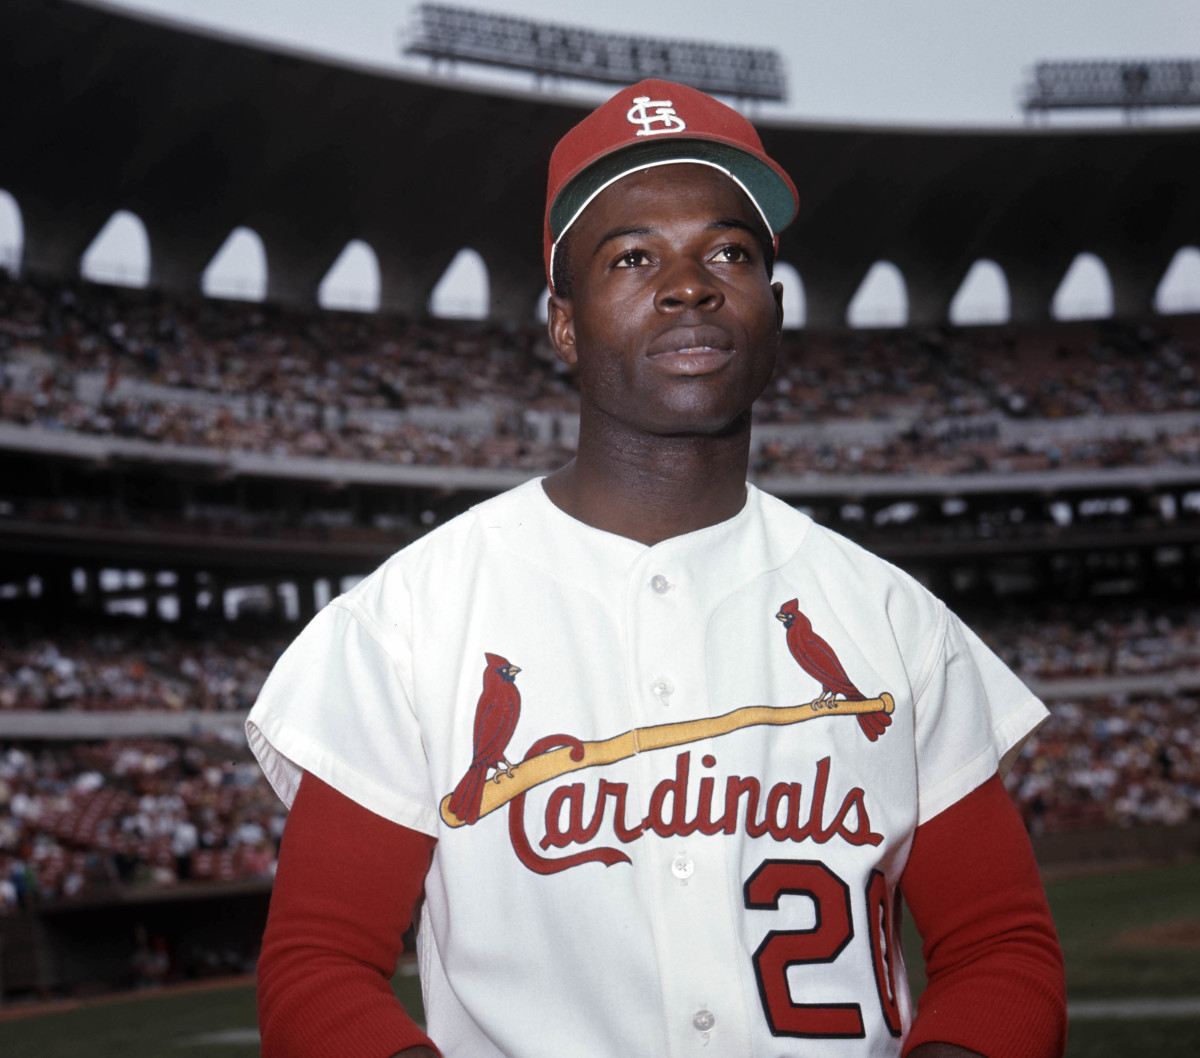 Cardinals outfielder Lou Brock in 1970